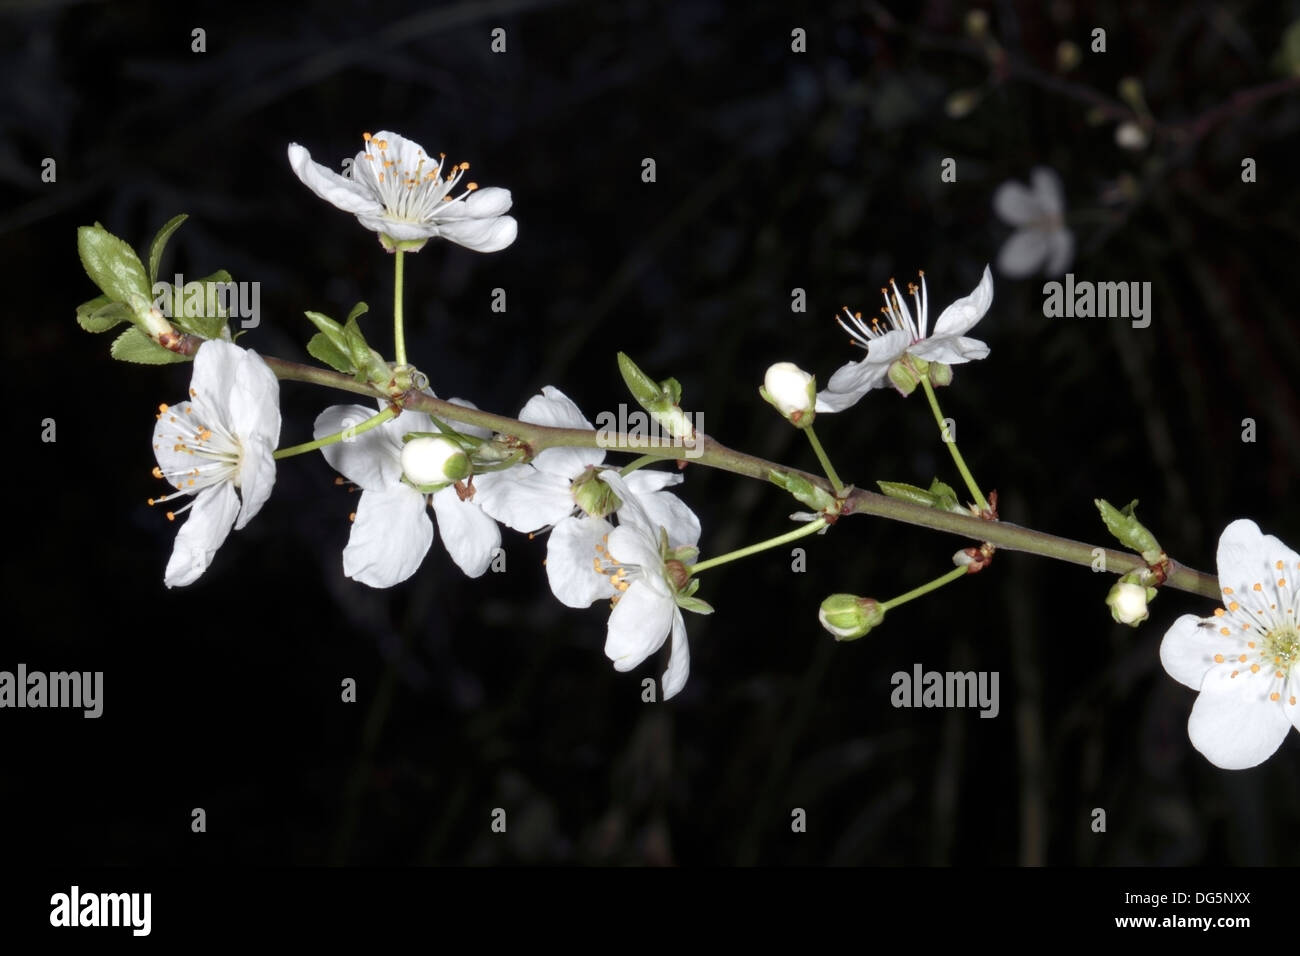 Close-up of flowers of genus Prunus - Family Rosaceae Stock Photo